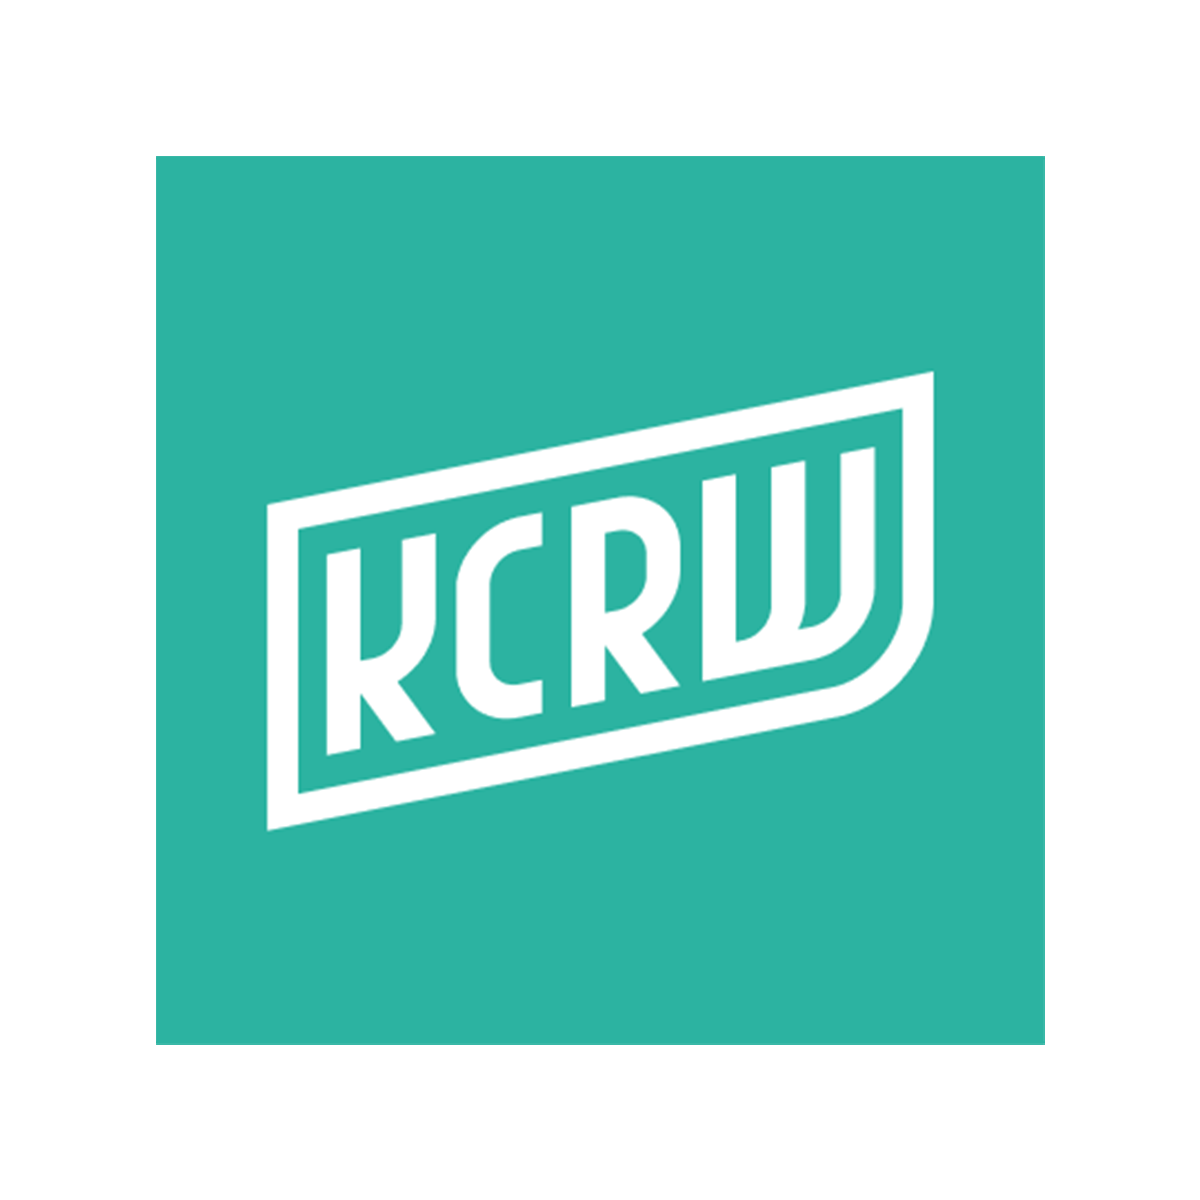 KCRW World News iHeart